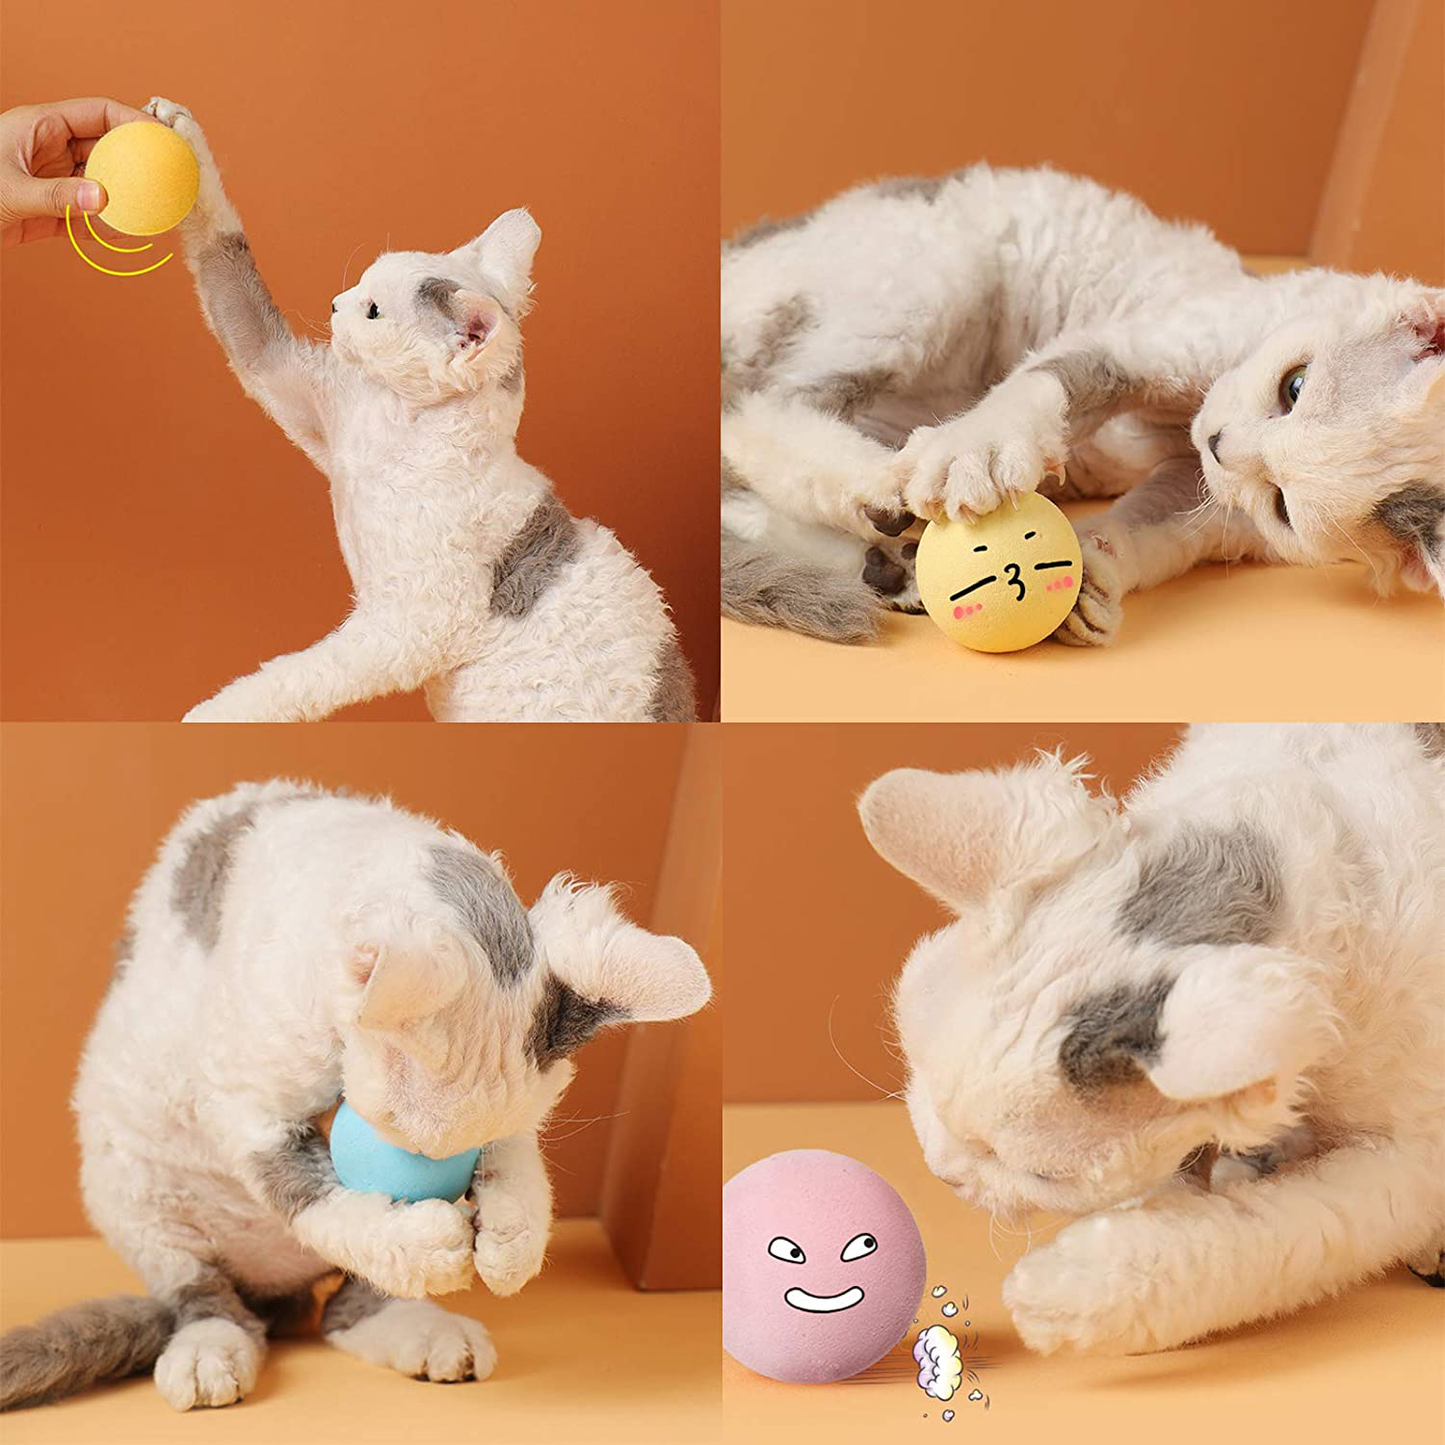 PETPSILAB Cat Toy Ball 3PCS Realistic Squeak Bird Frog Cricket Interactive Kitten Refillable Catnip Pet Toys Animals & Pet Supplies > Pet Supplies > Cat Supplies > Cat Toys PETPSILAB   